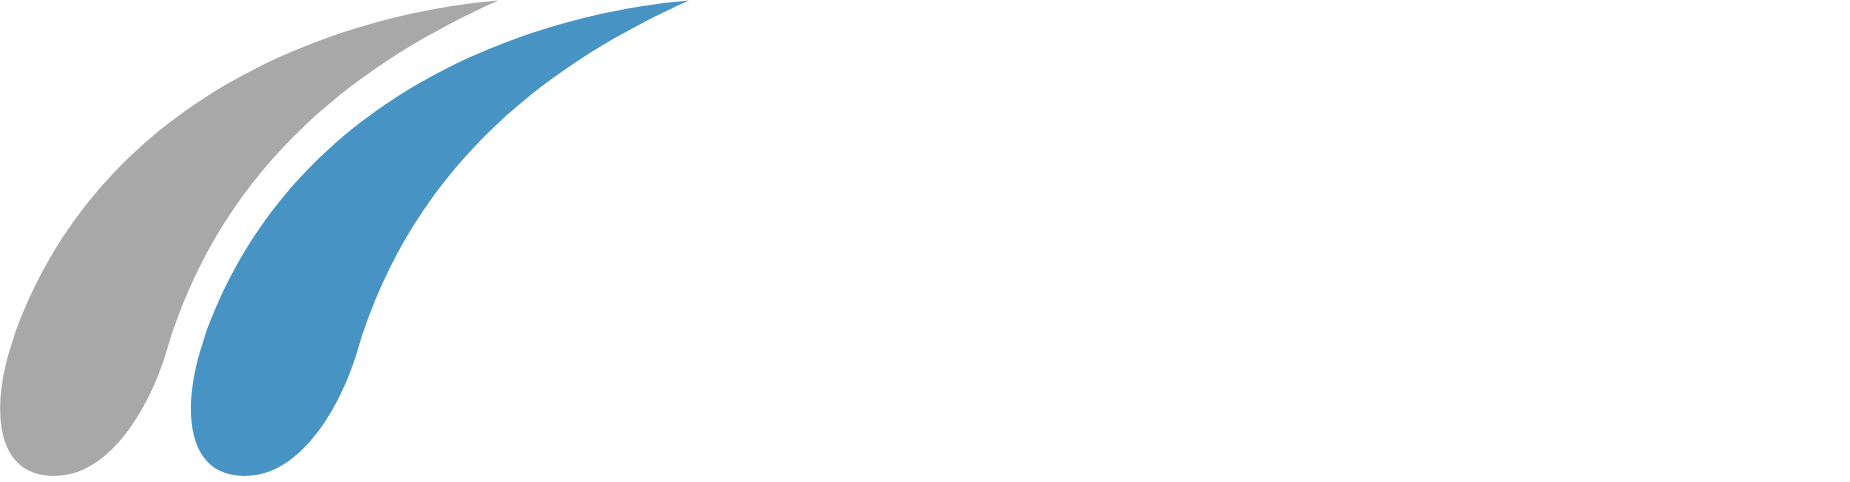 Mechel PAO logo large for dark backgrounds (transparent PNG)